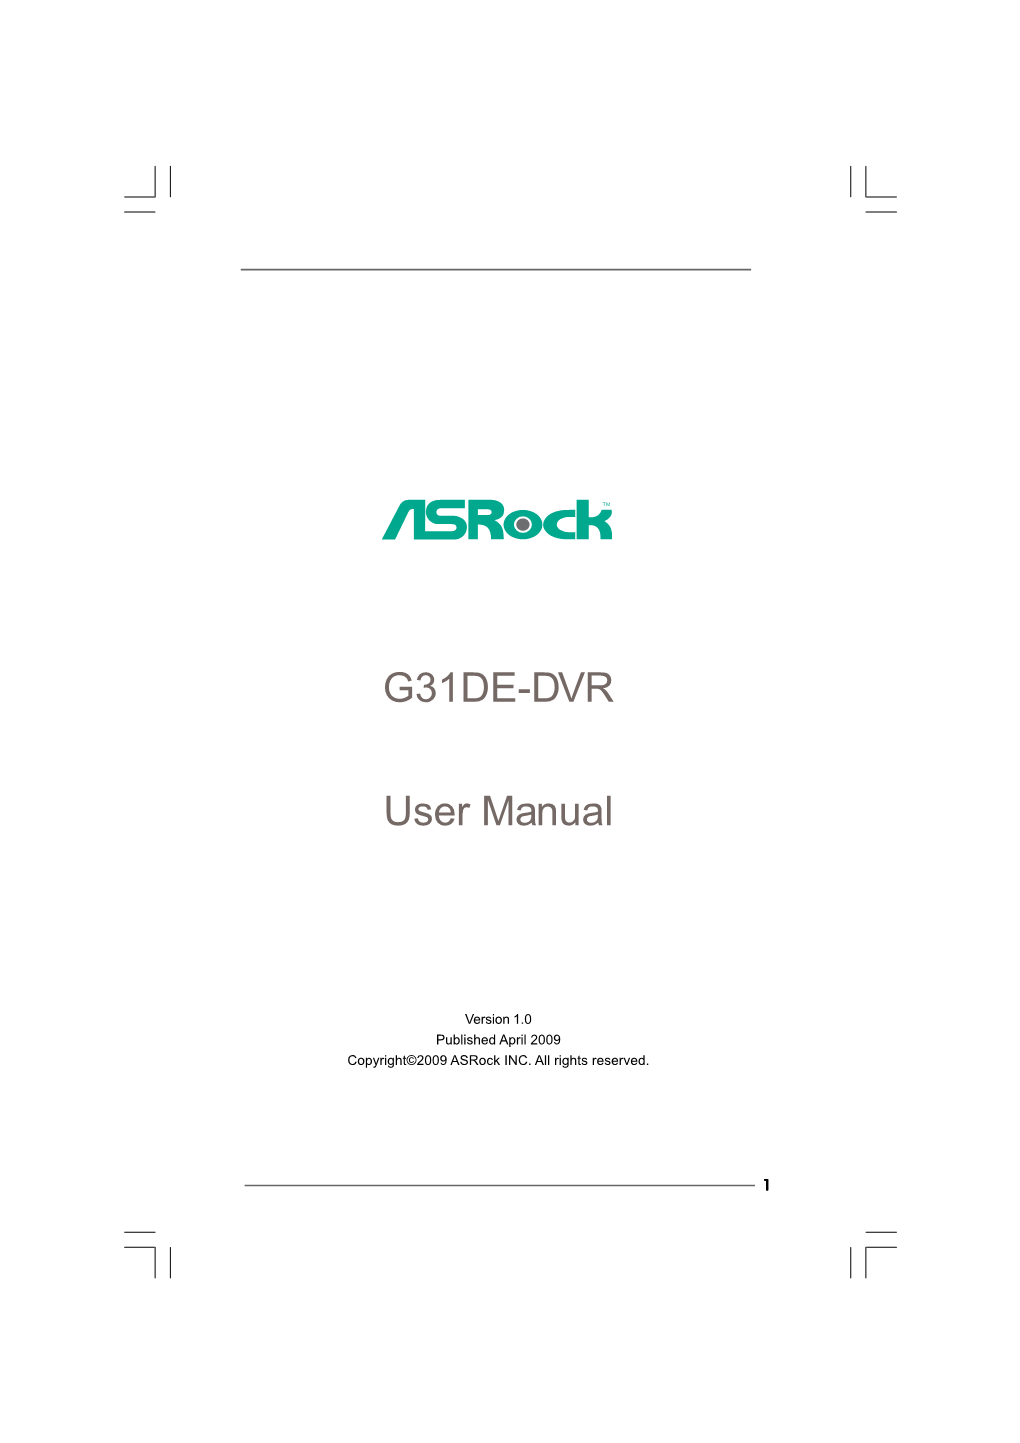 G31DE-DVR User Manual